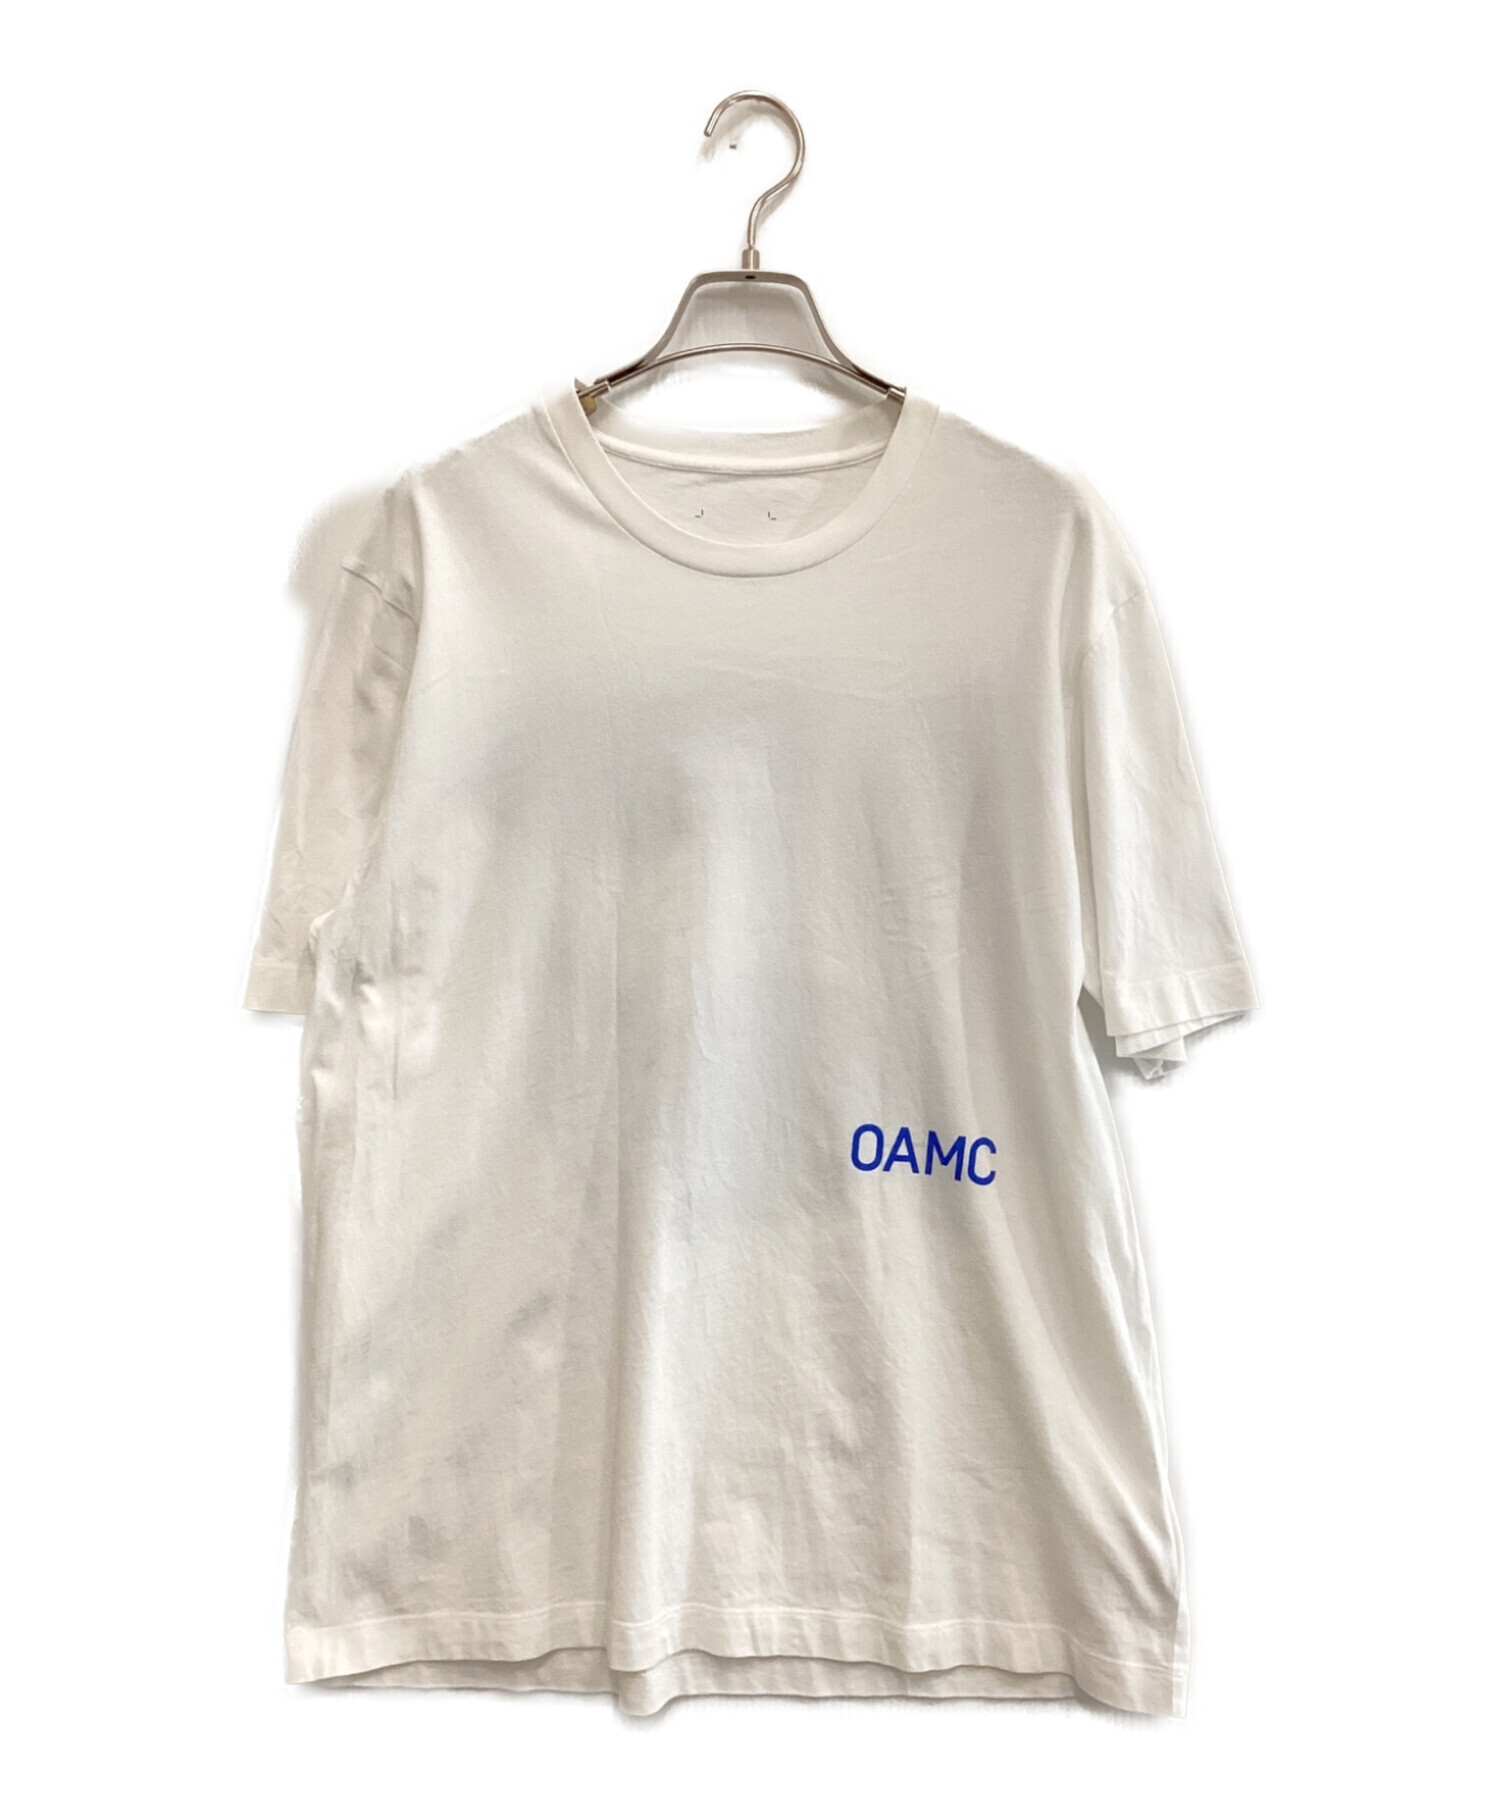 oamc tシャツ Sサイズ